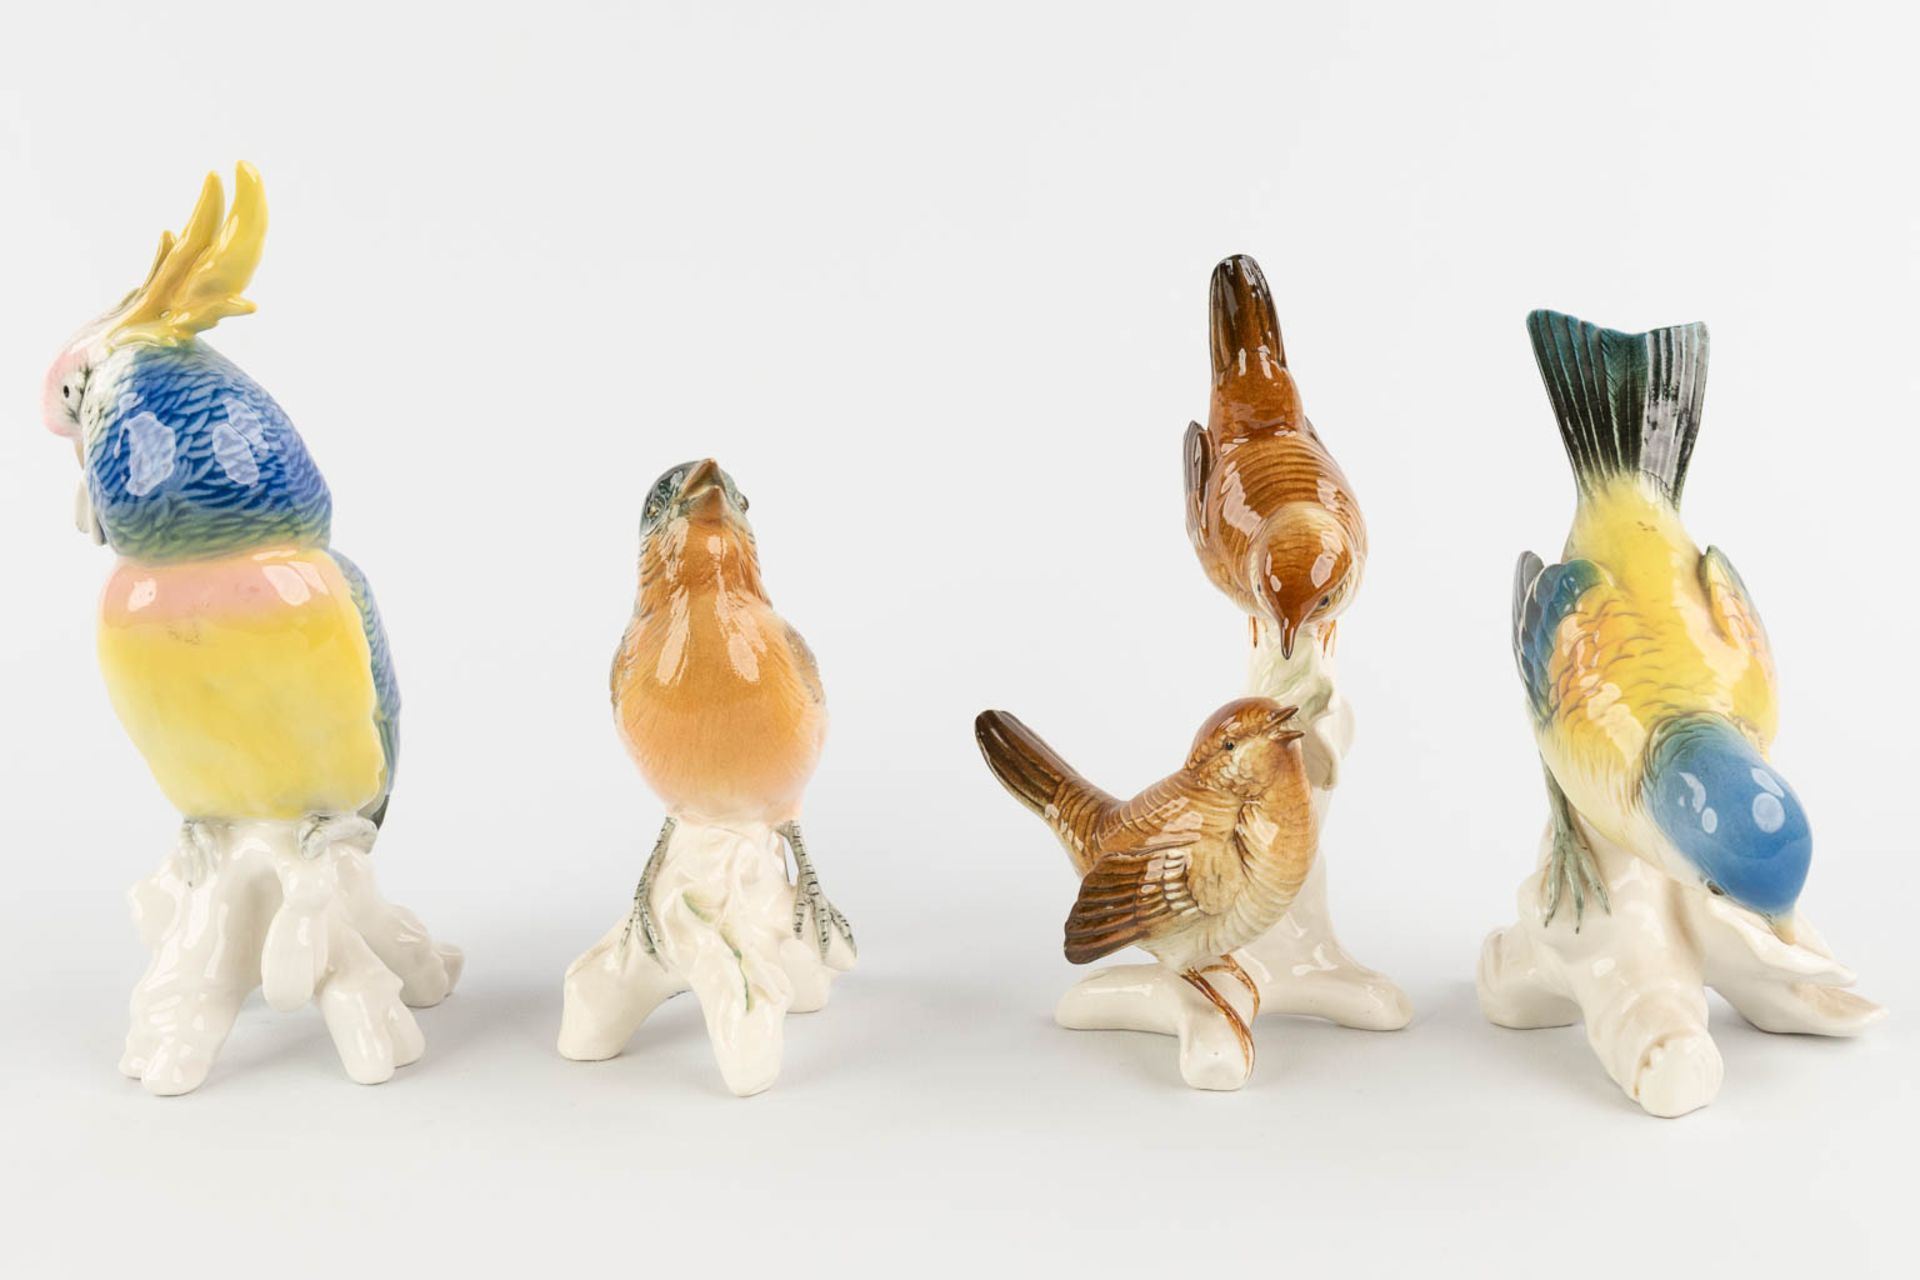 Karl ENS Porzellan, 8 birds, polychrome porcelain. 20th C. (H:19 cm) - Image 6 of 15